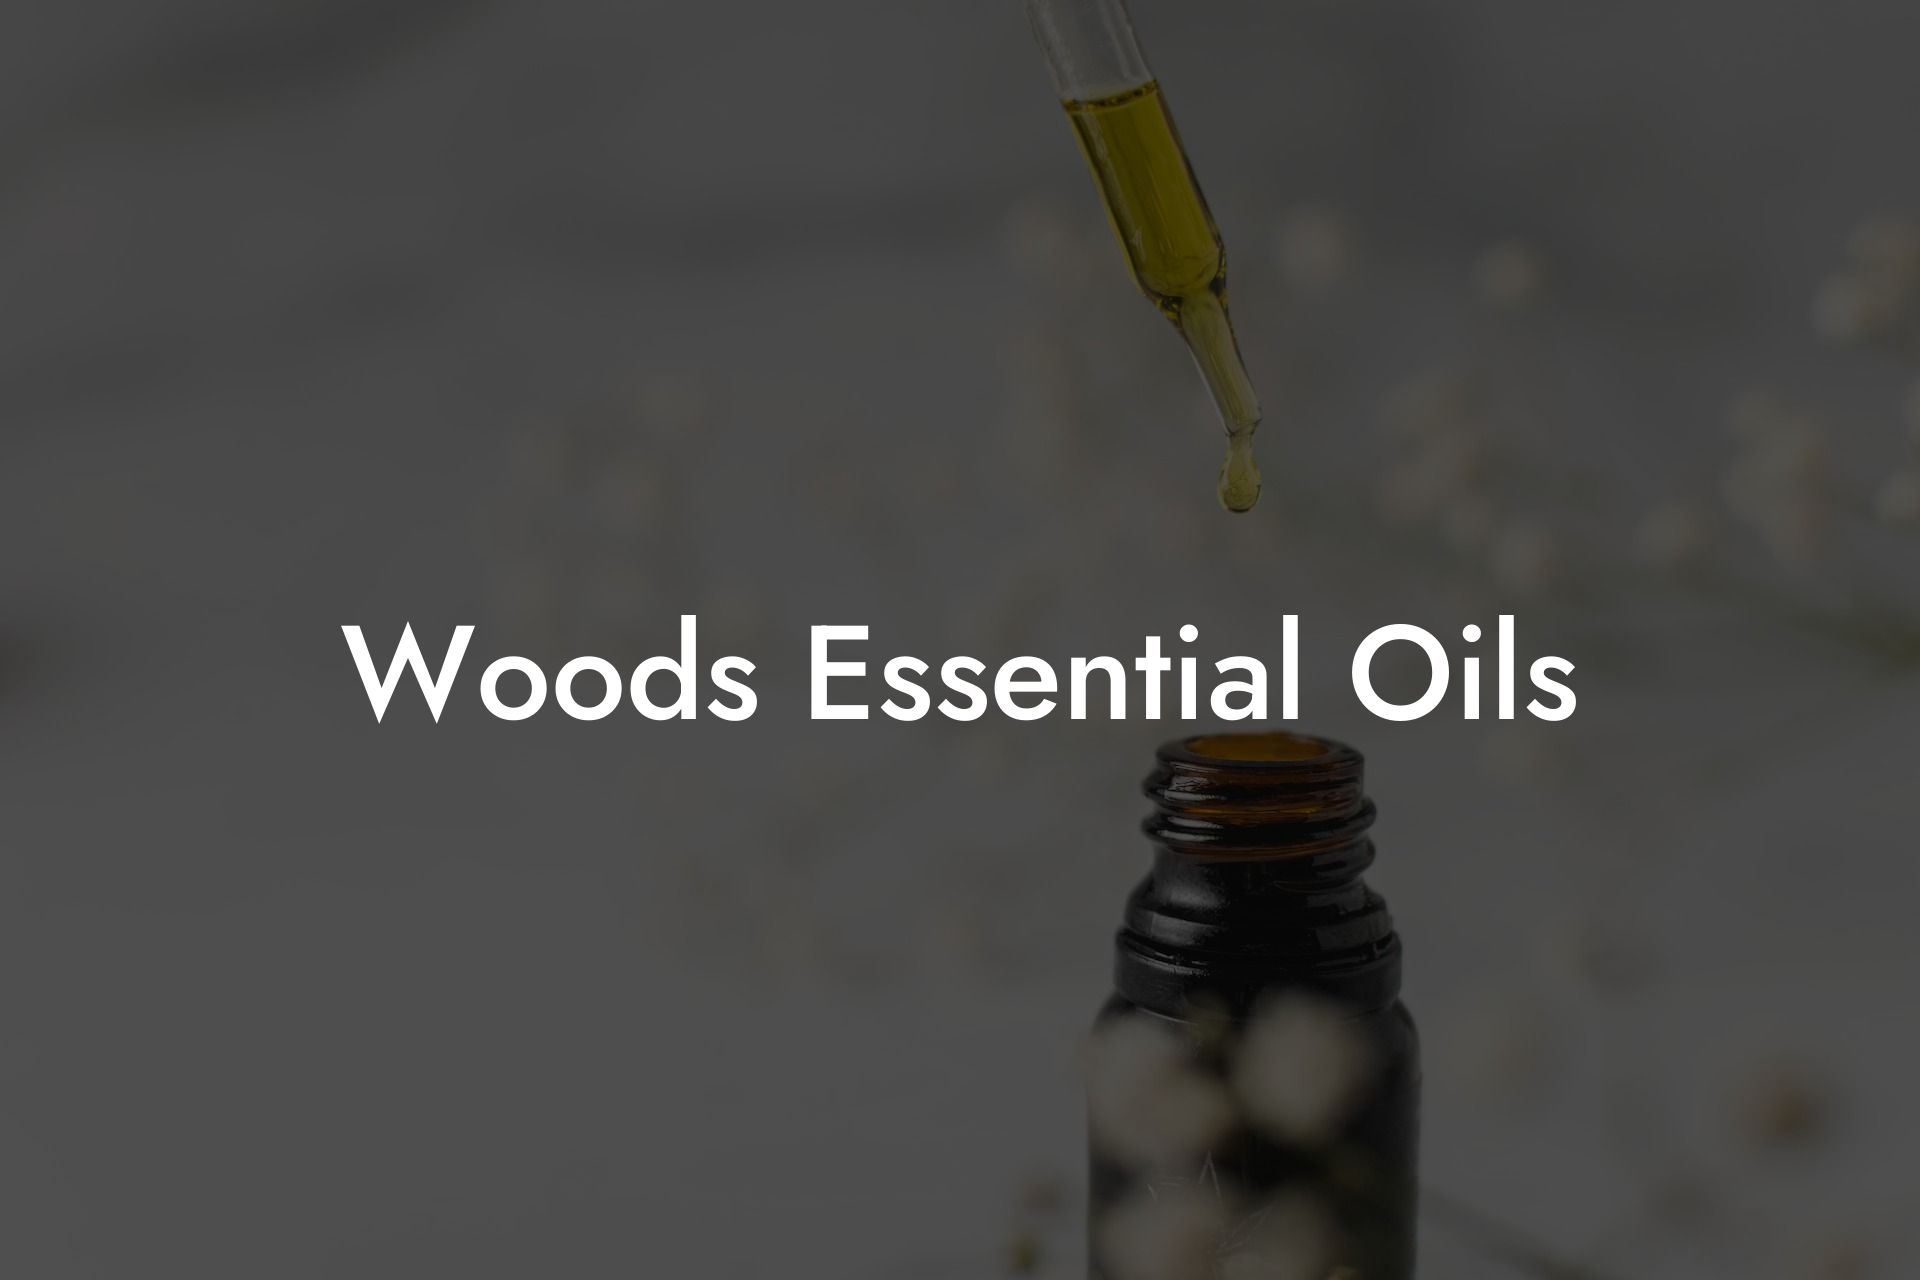 Woods Essential Oils